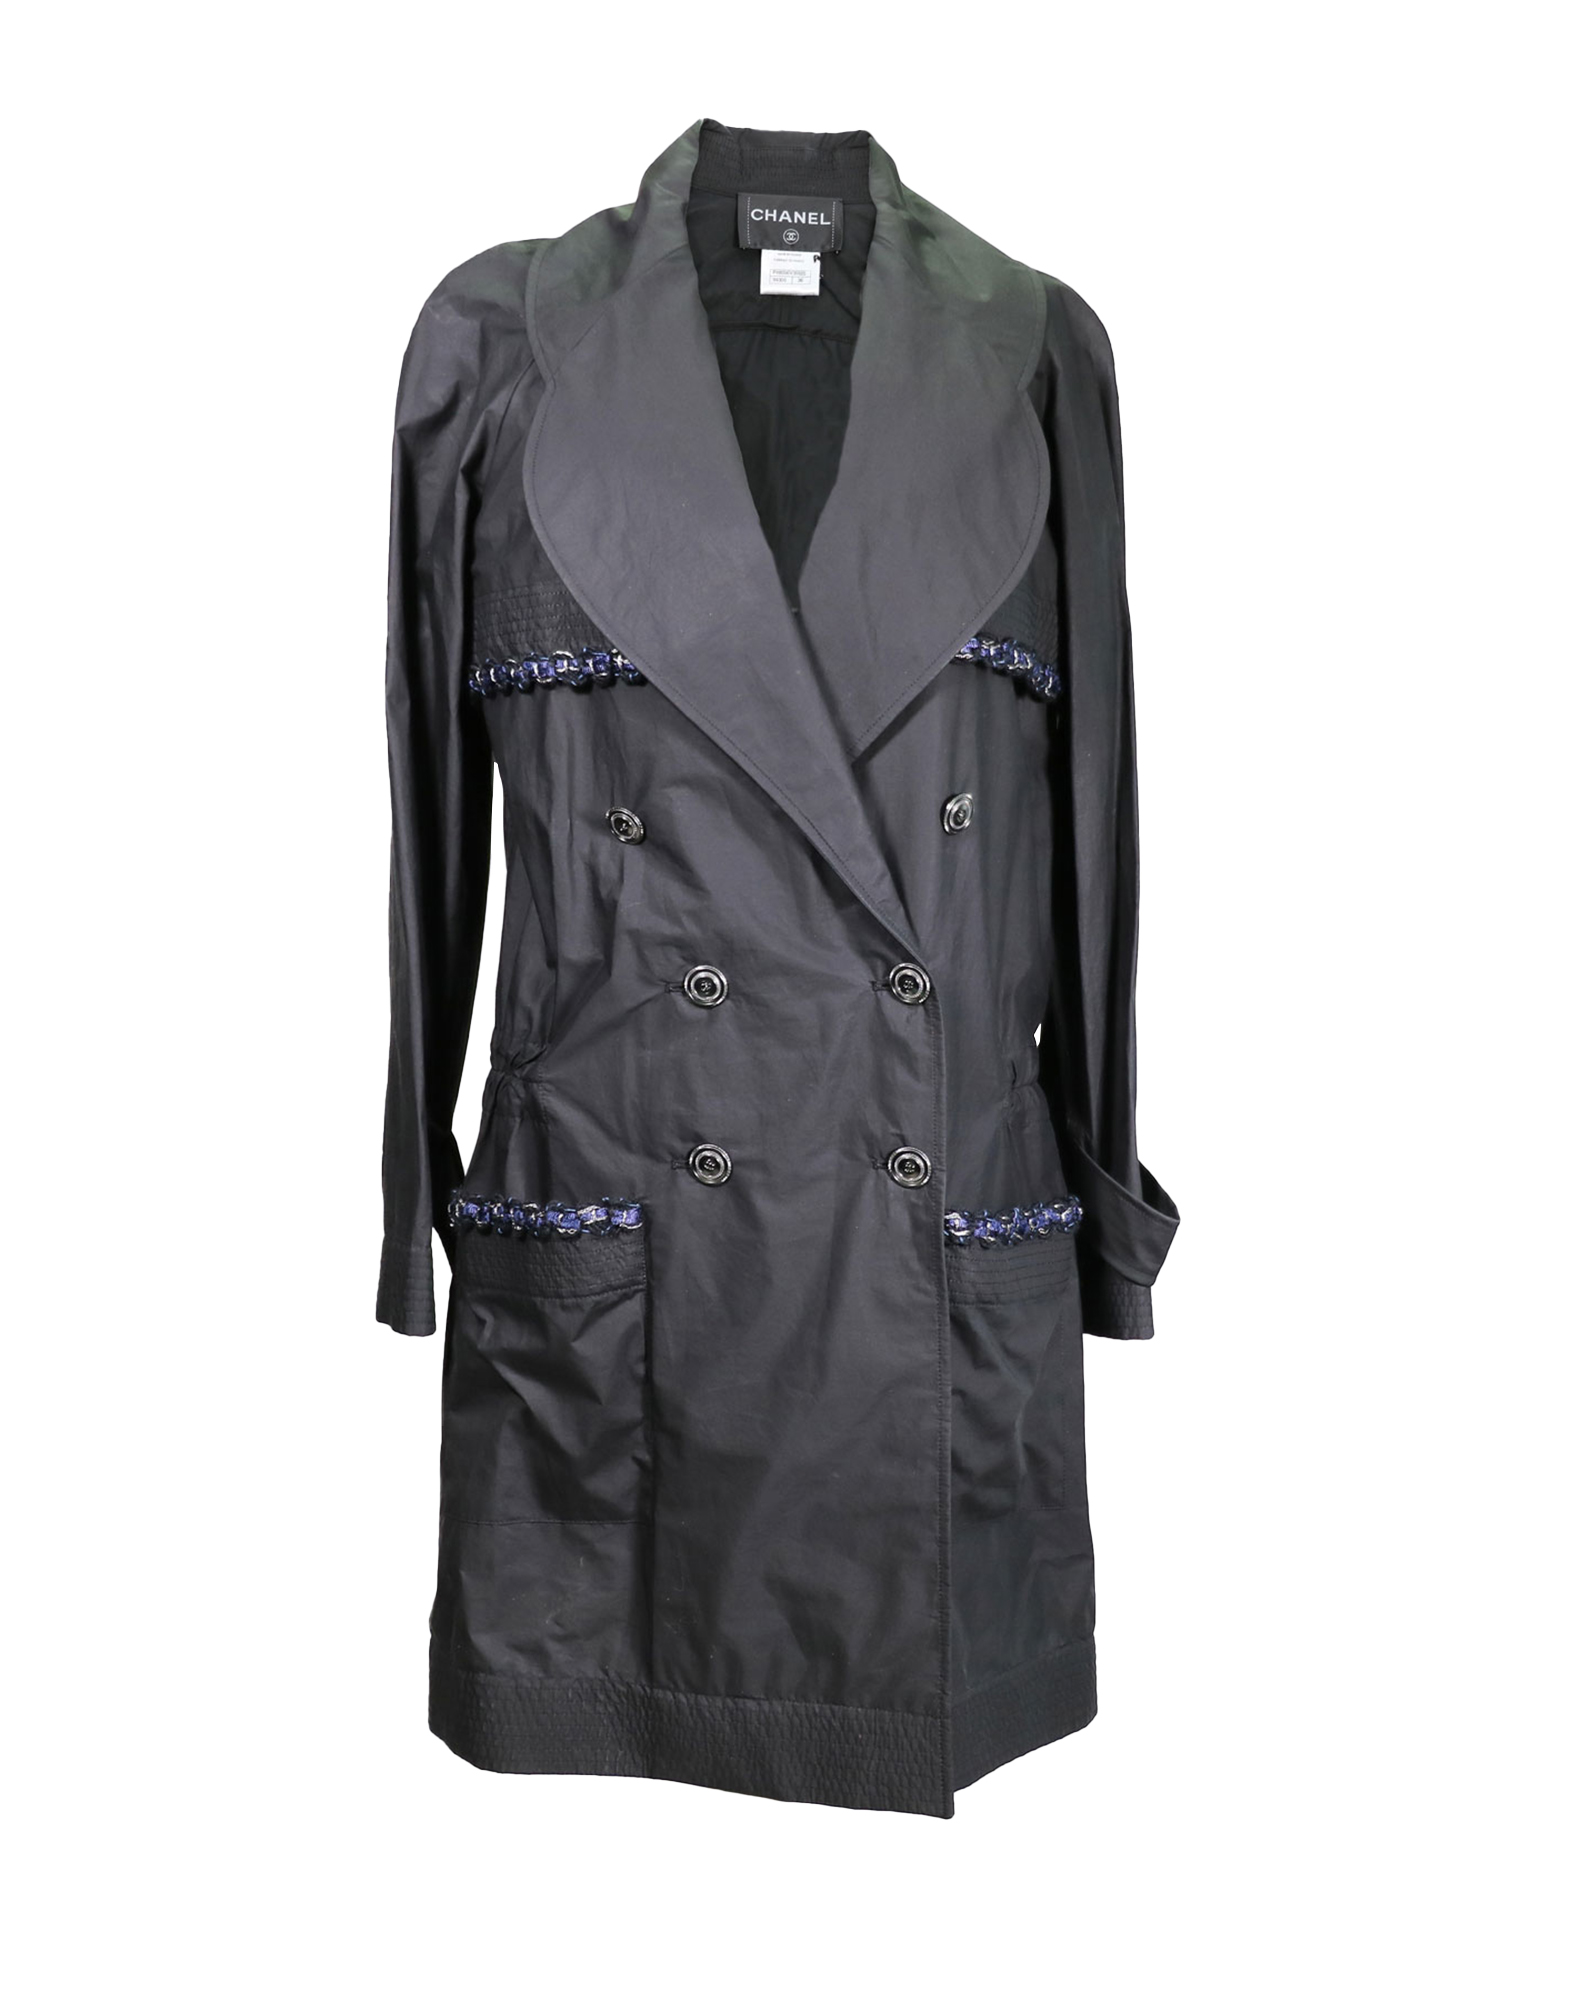 Chanel - Black cotton trench coat